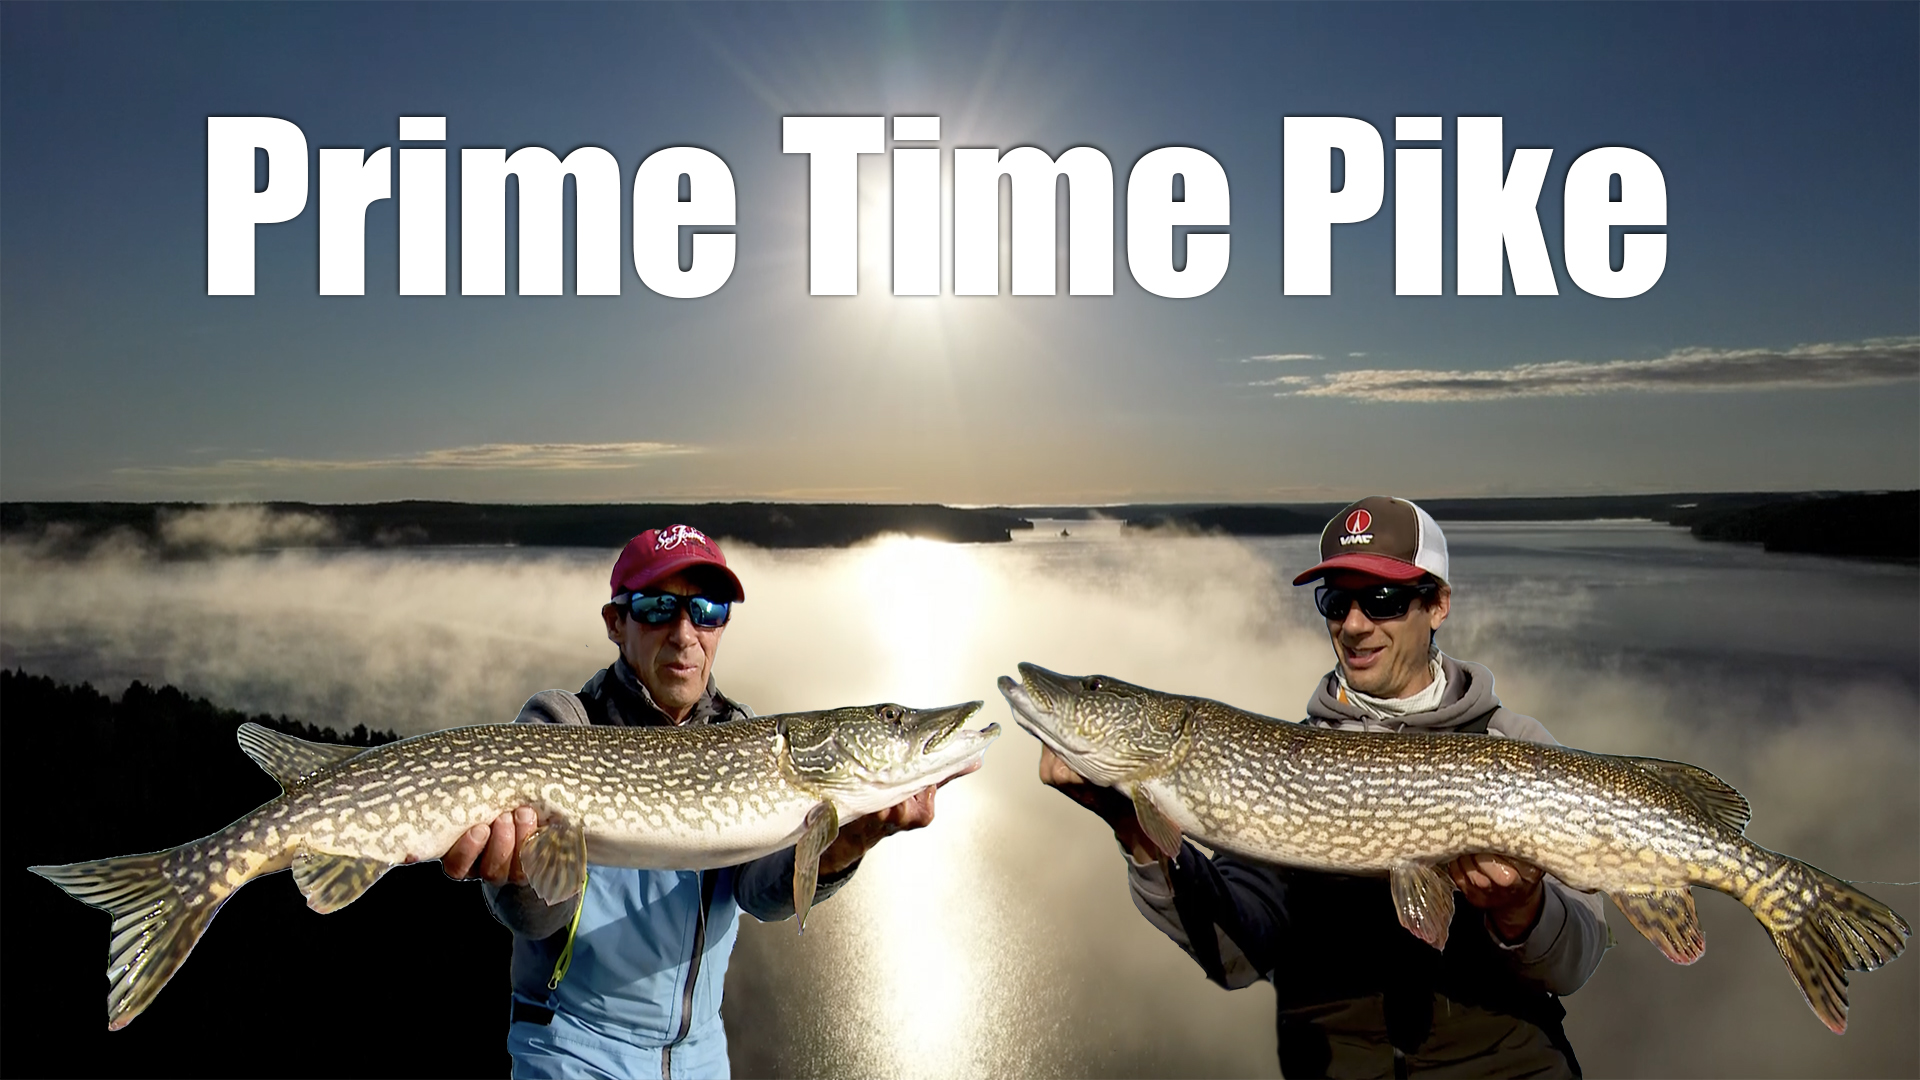 Prime Time Pike